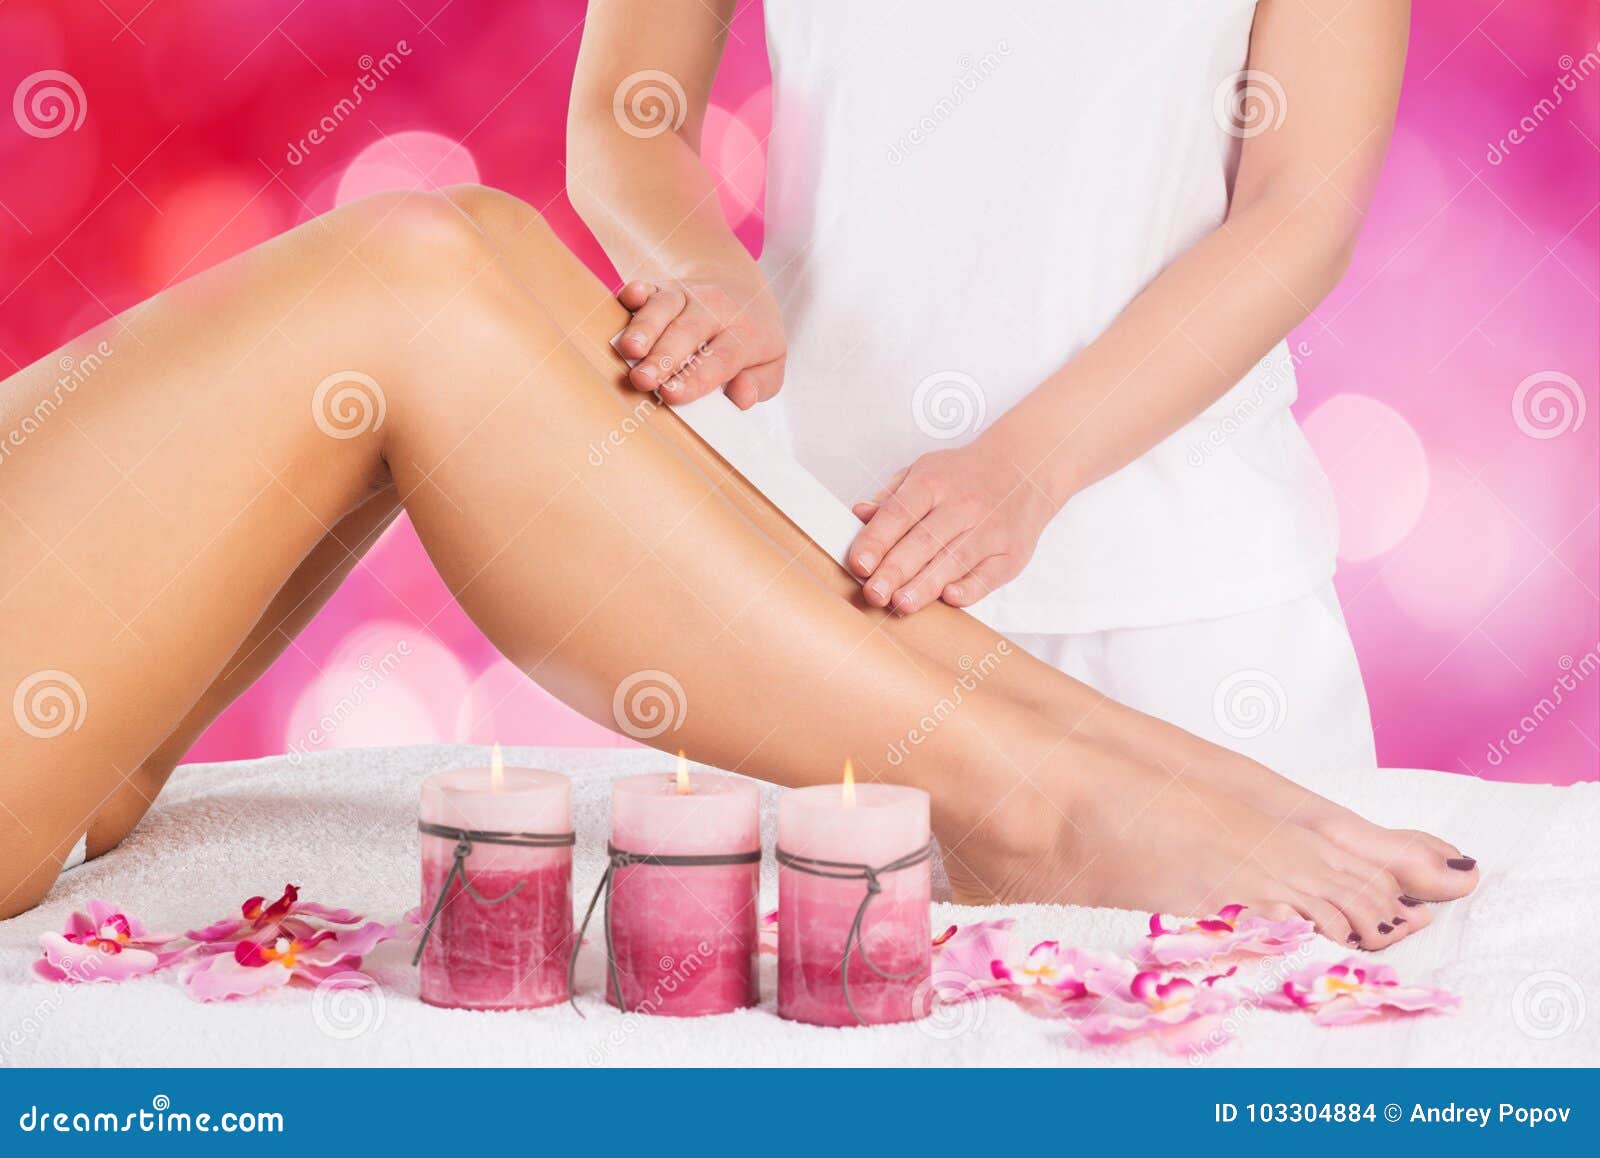 beautician waxing leg of woman with wax strip